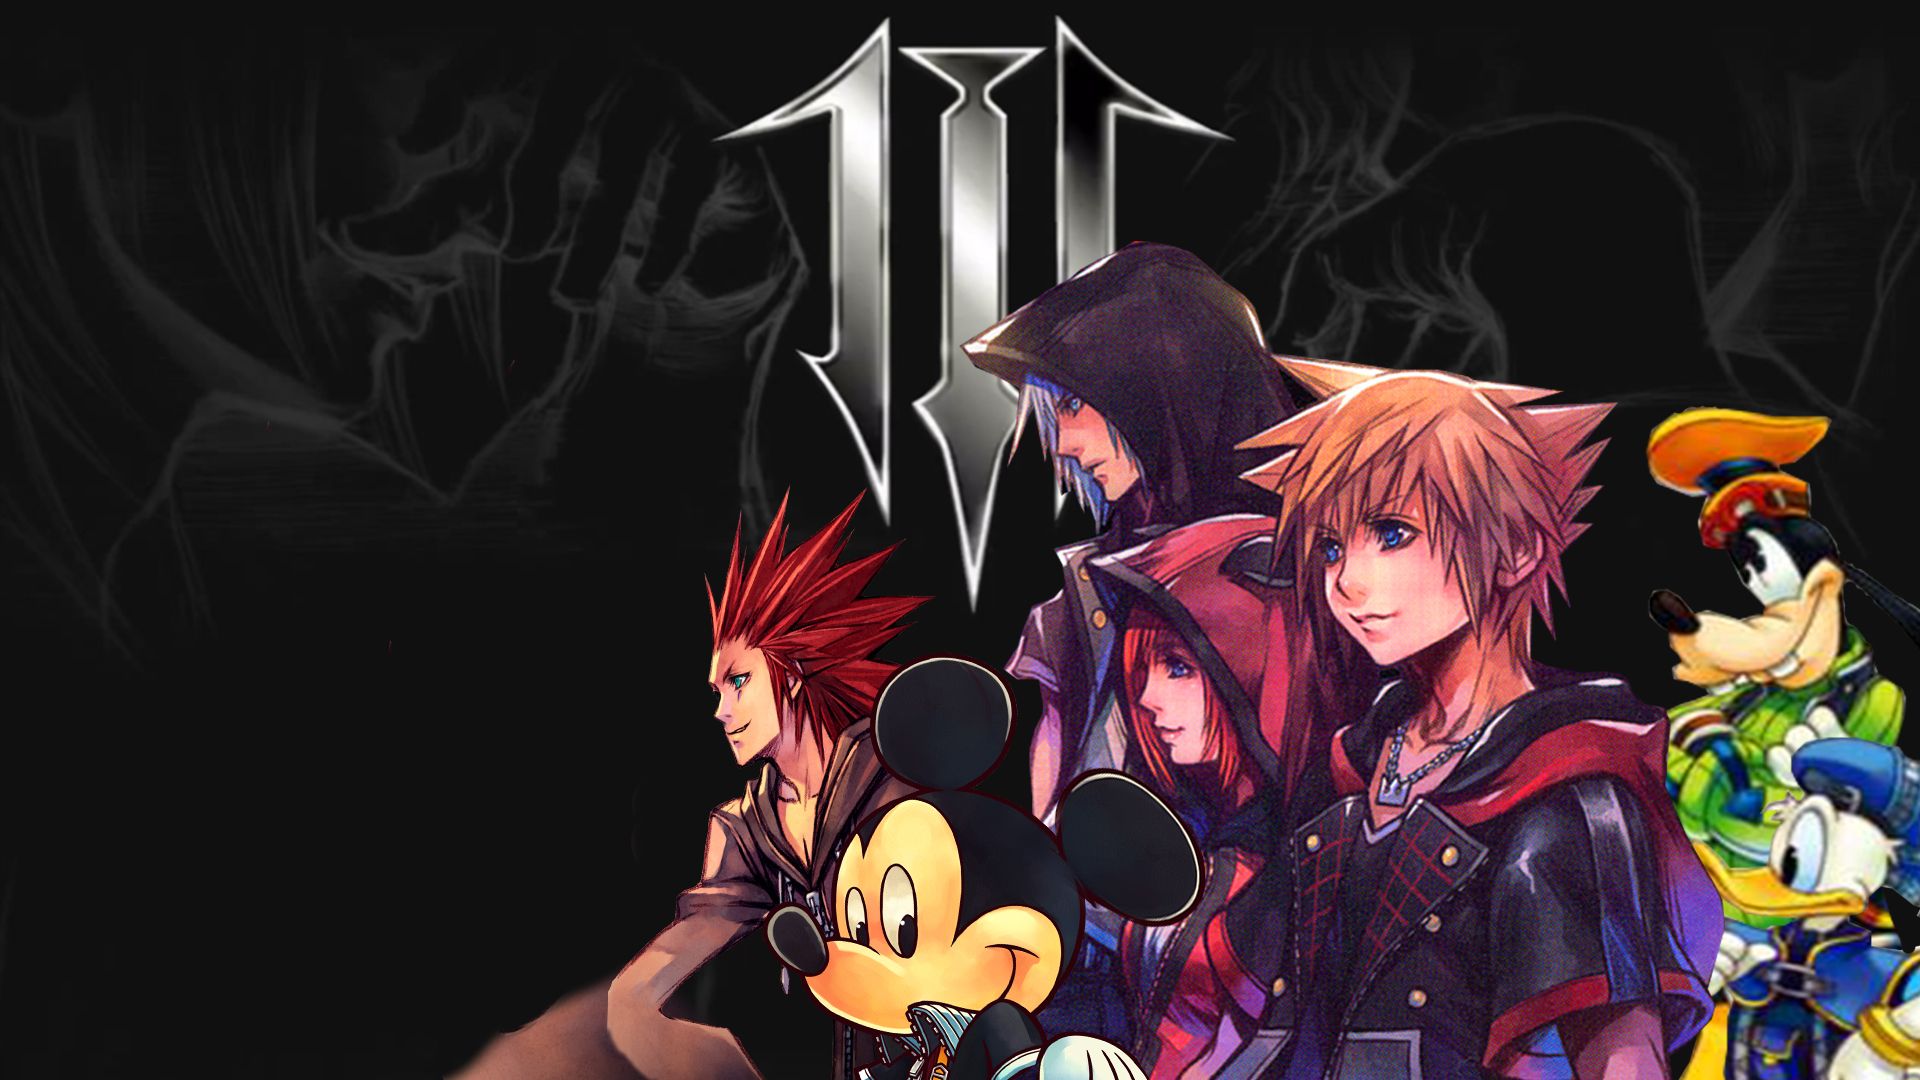 Download 99 Kingdom Hearts Iii Wallpapers On Wallpapersafari Wallpaper Hd Wallpaper Hd Com